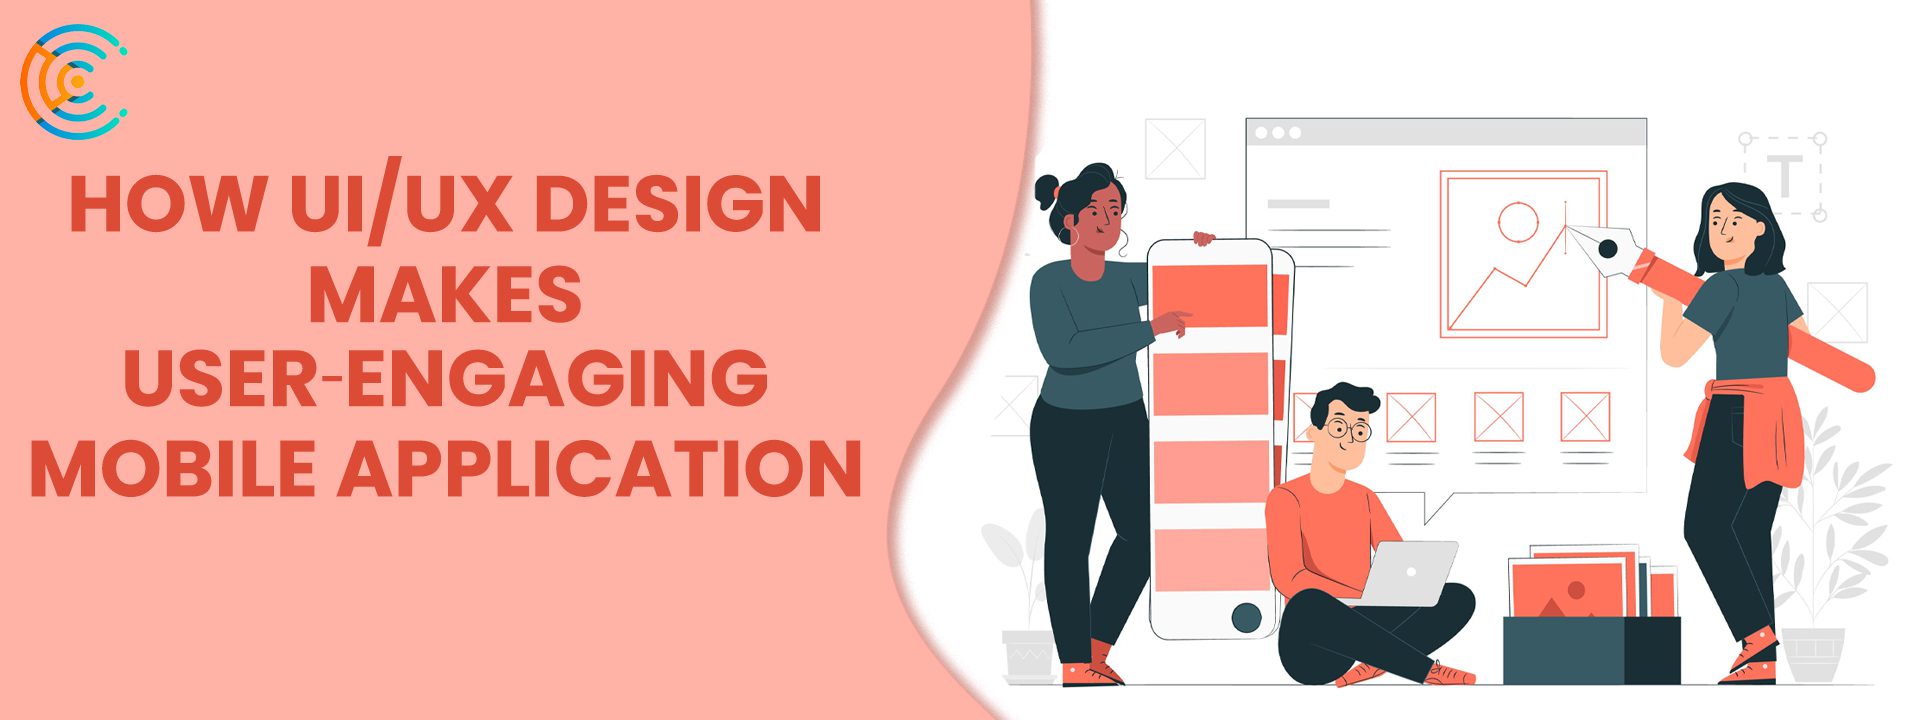 ui-ux-design-makes-user-engaging